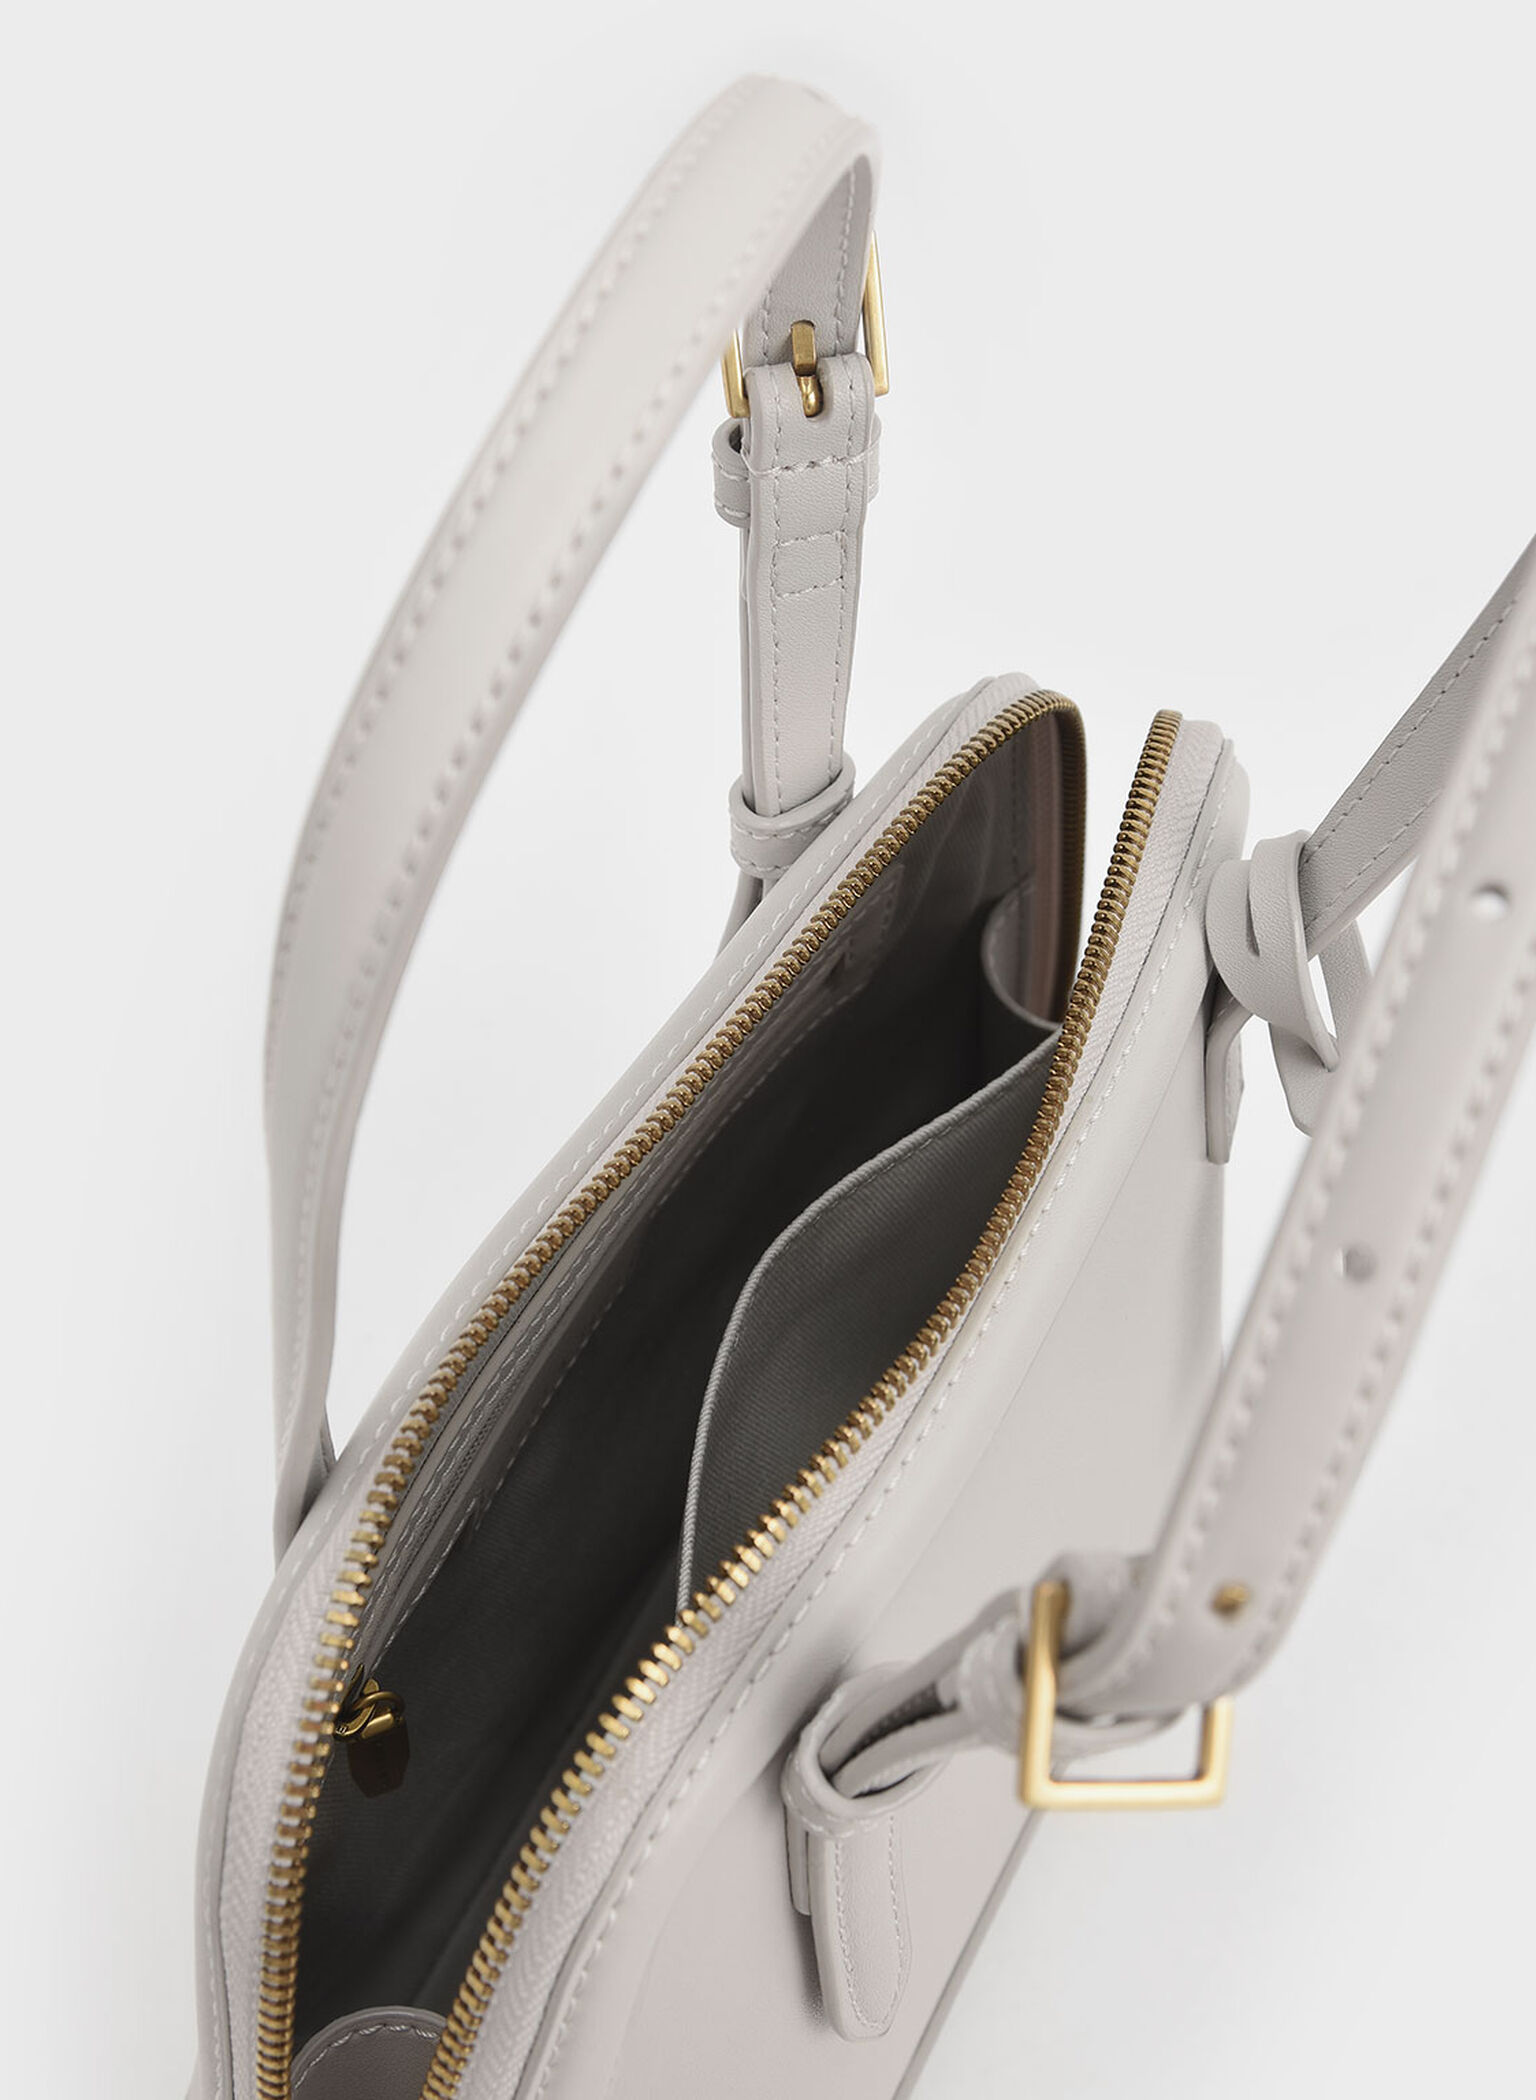 Enola Double Handle Structured Bag, Light Grey, hi-res